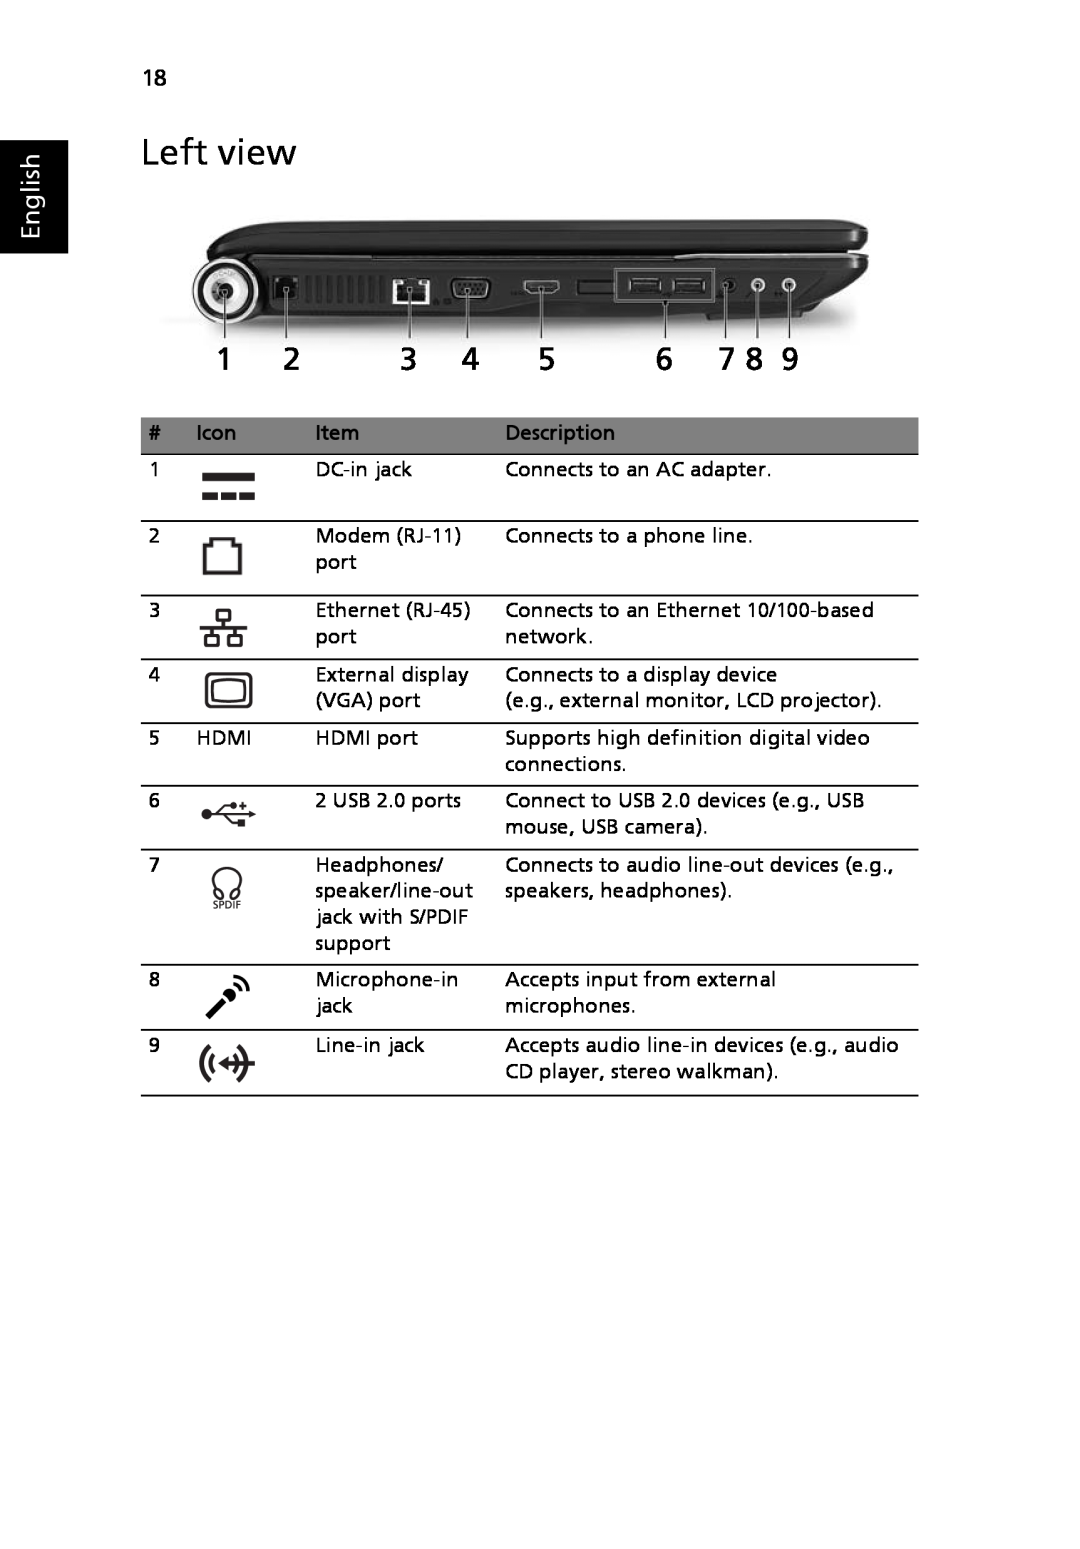 Acer 8920 Series, LE1 manual Left view, English, Icon, Description 